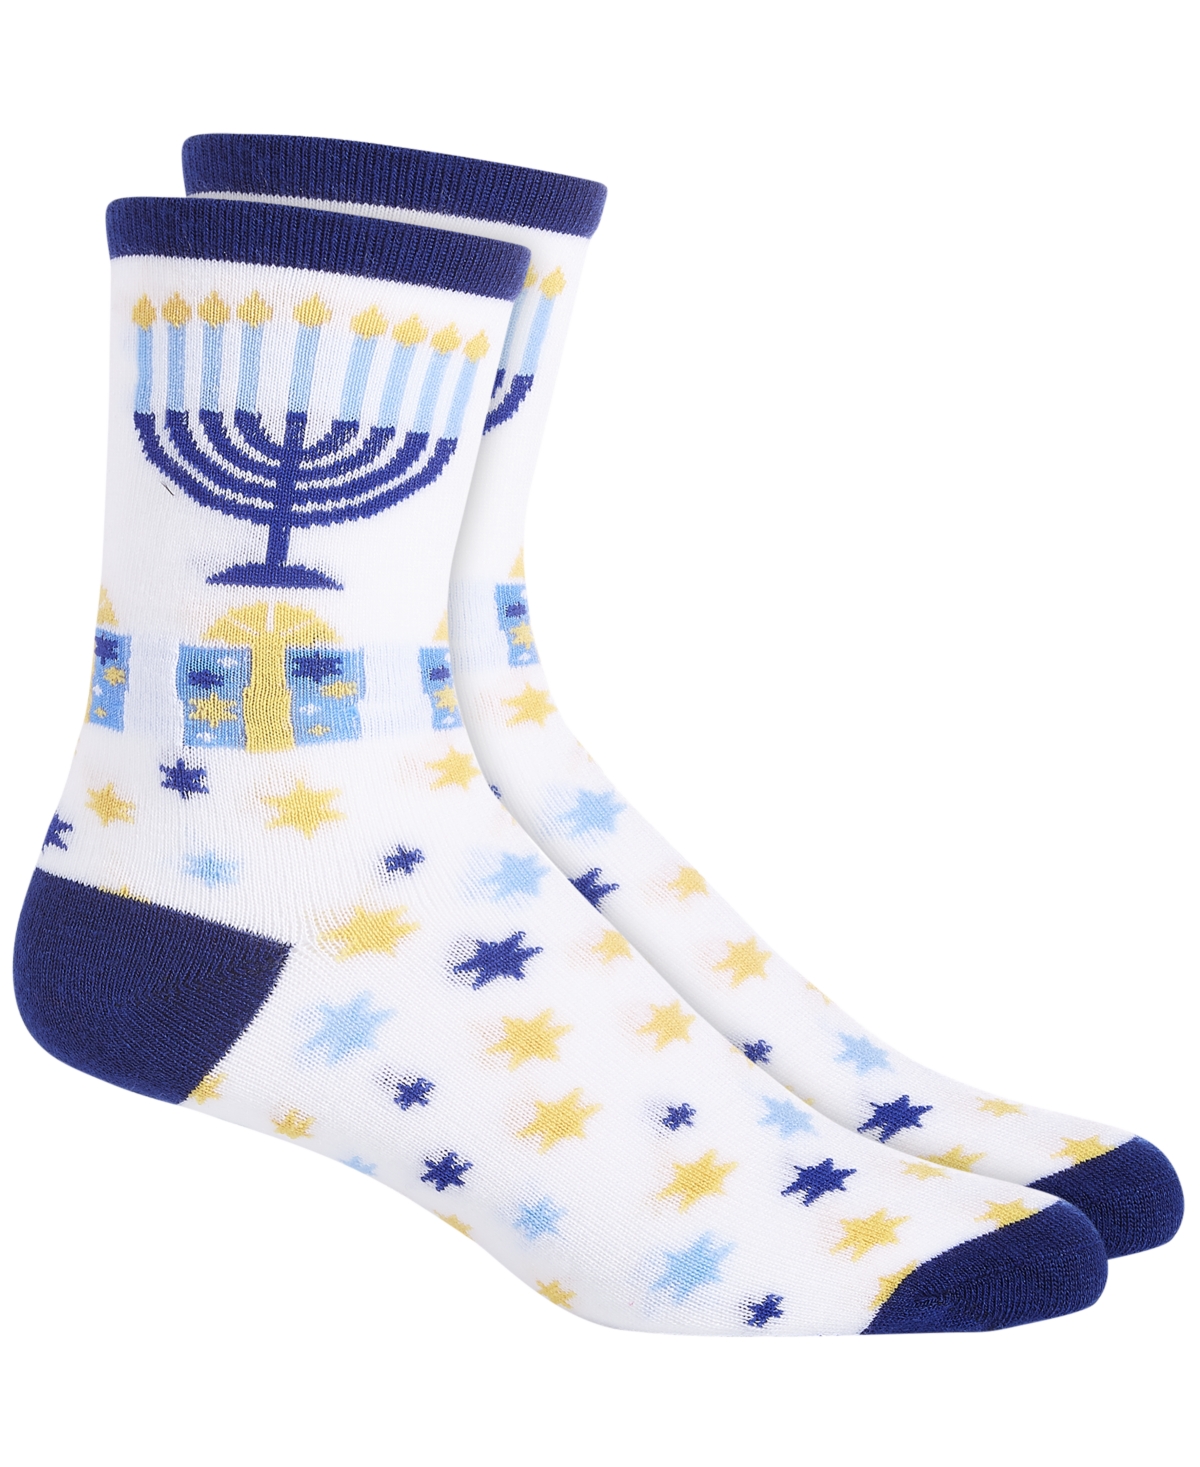 Holiday Crew Socks, Created for Macy's - Hanukkah